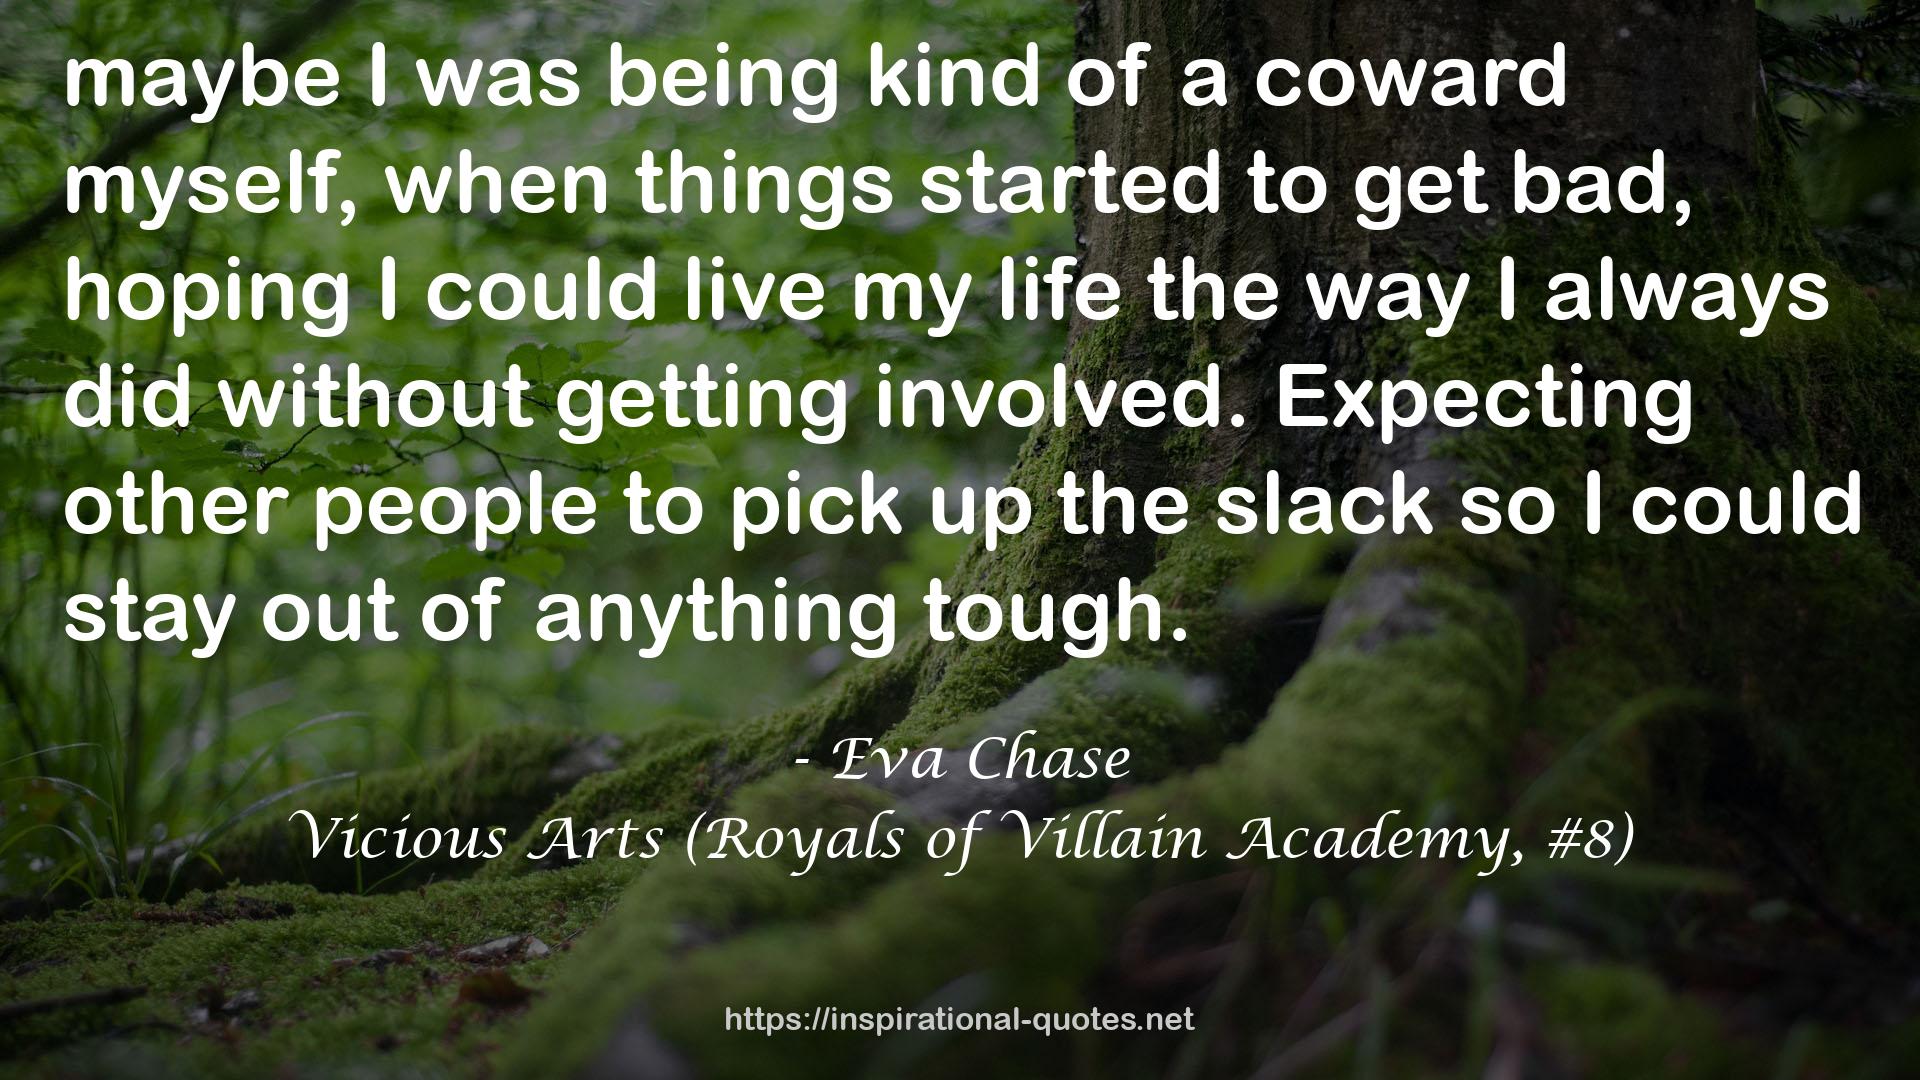 Vicious Arts (Royals of Villain Academy, #8) QUOTES